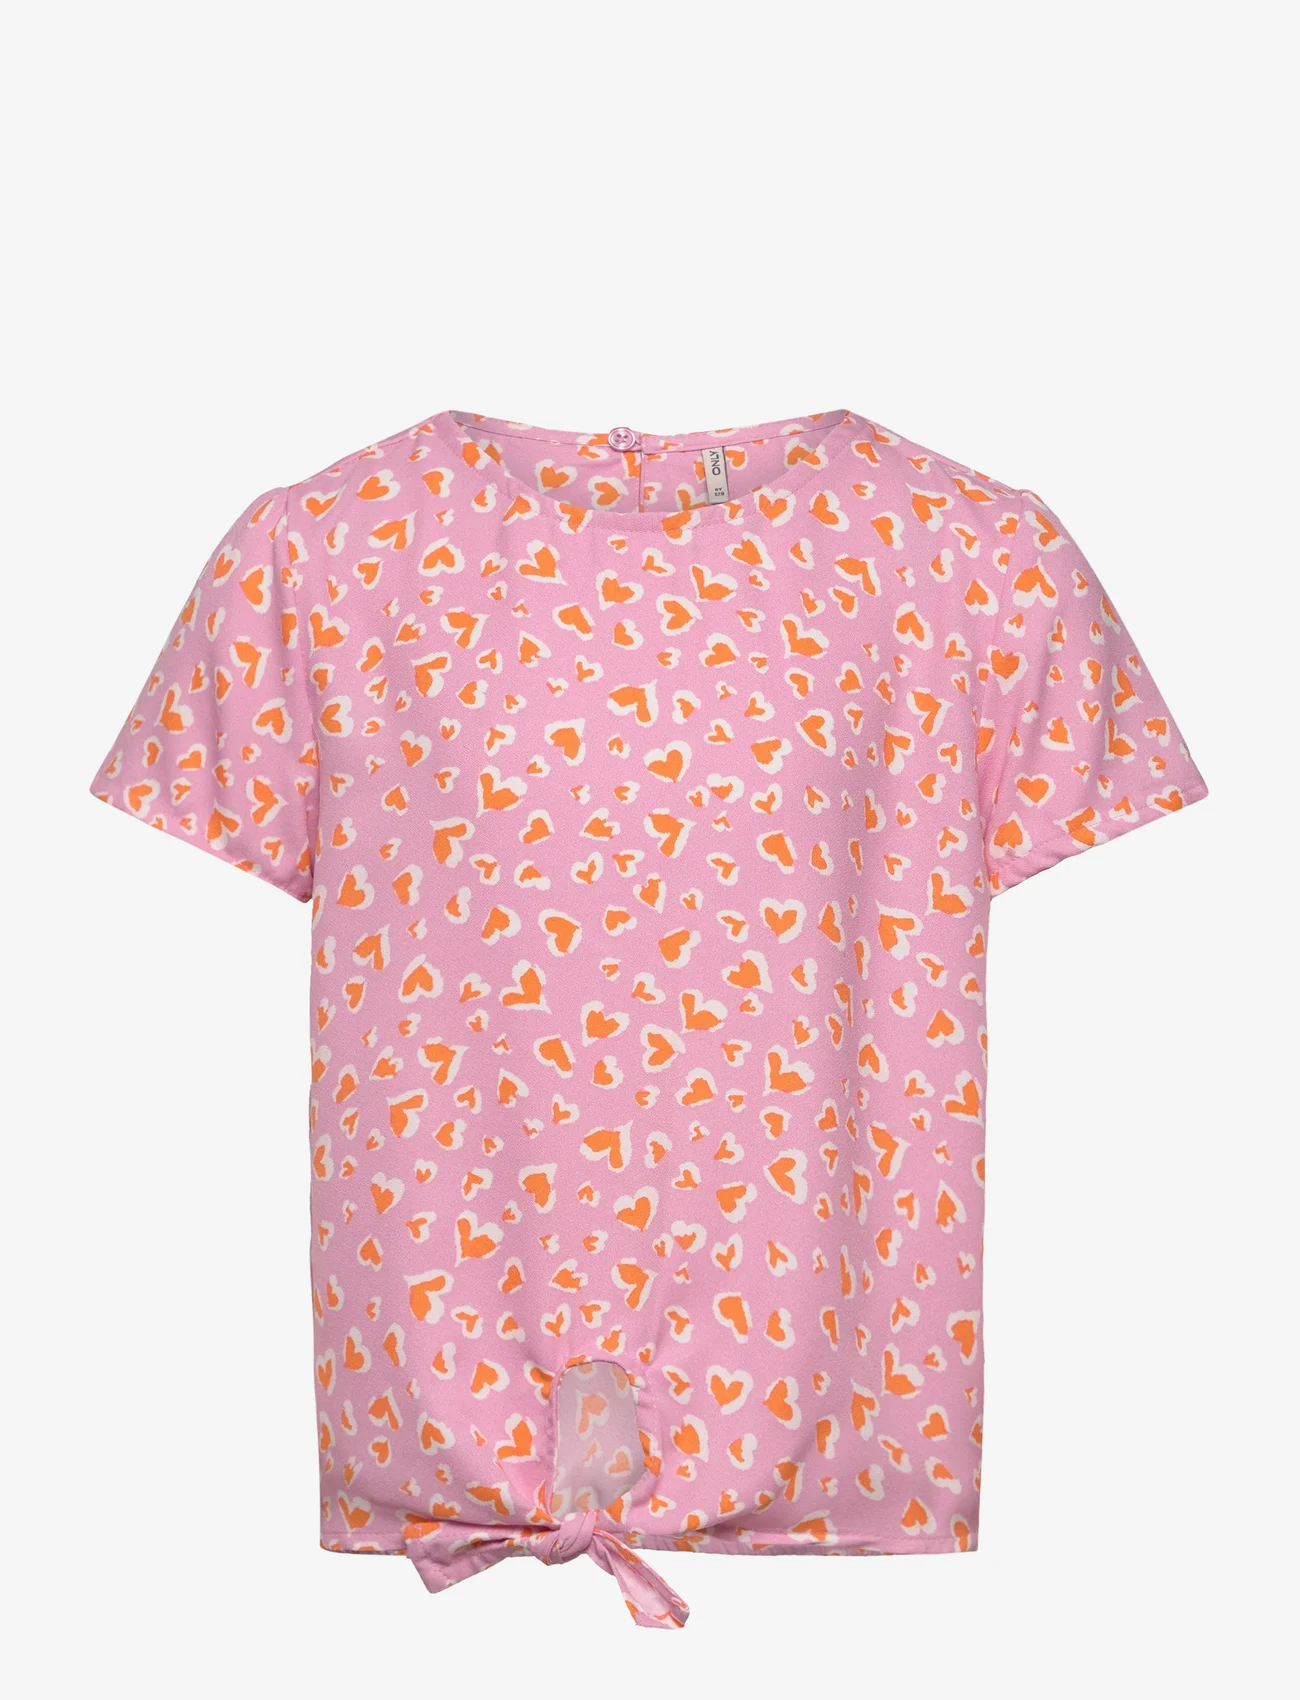 Kids Only - KOGPALMA KNOT S/S TOP PTM - kortärmade t-shirts - begonia pink - 0